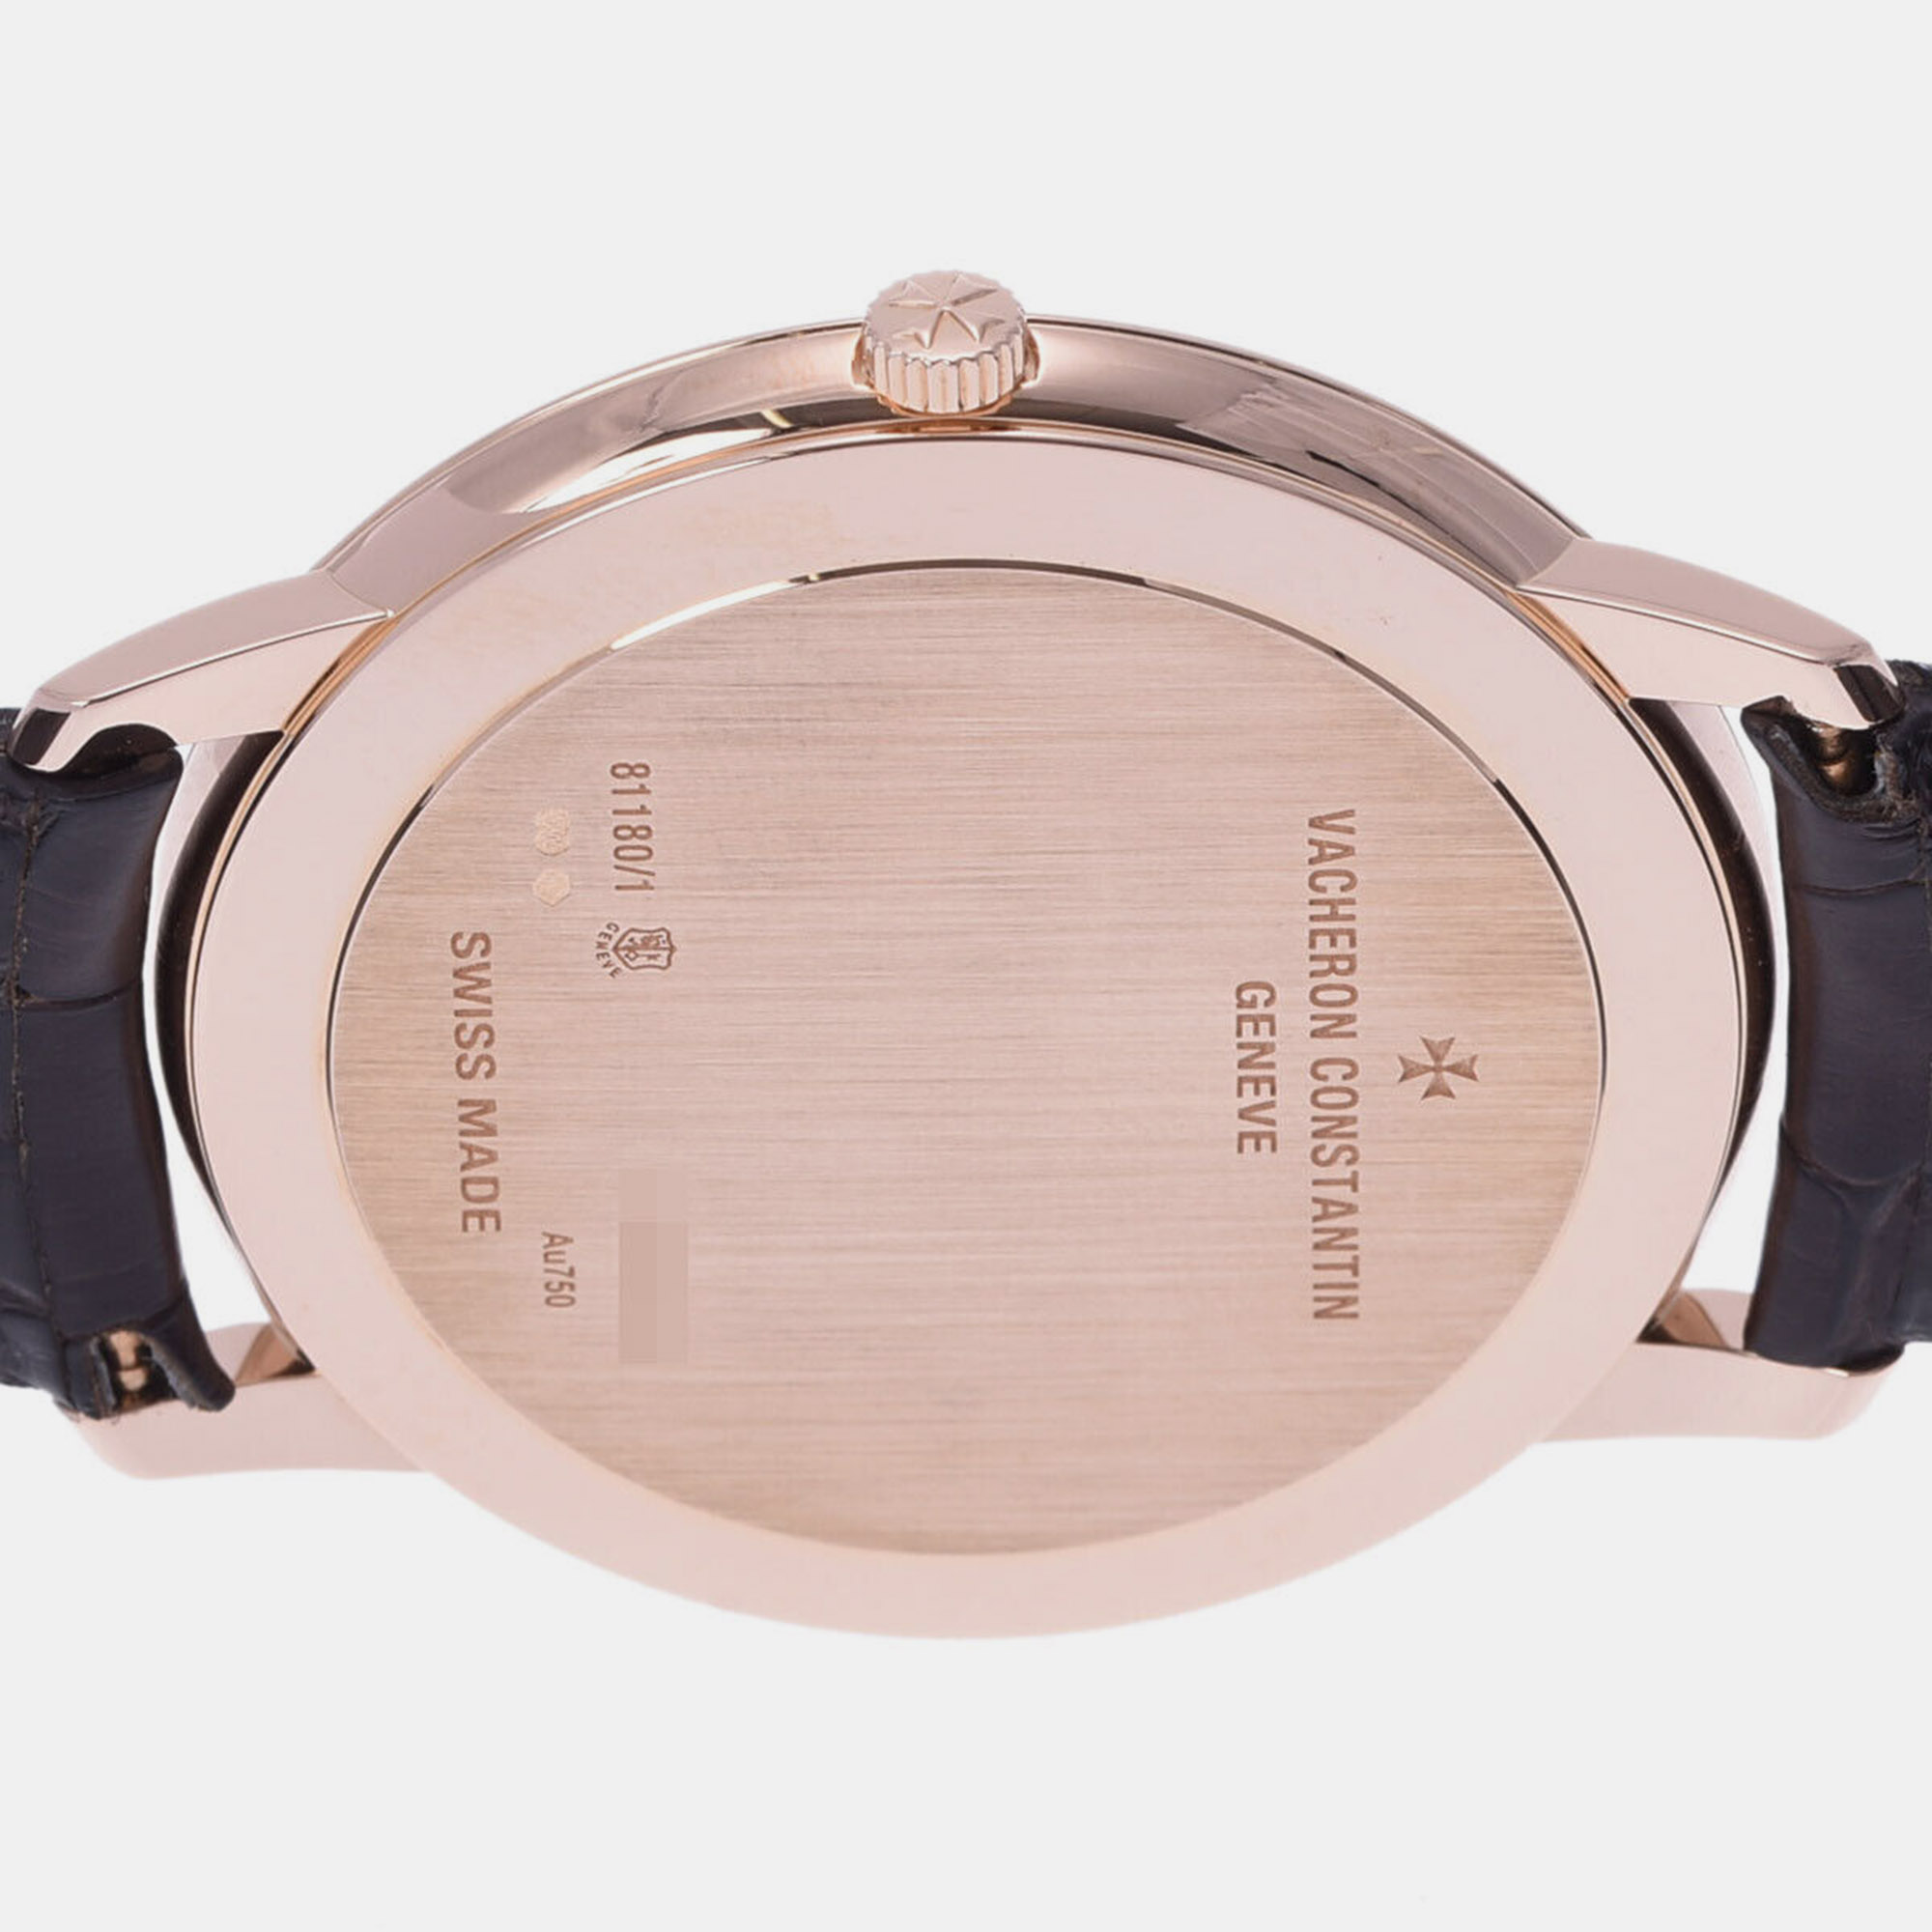 Vacheron Constantin Silver 18k Rose Gold Patrimony 81180/000R-9159 Manual Winding Men's Wristwatch 40 Mm